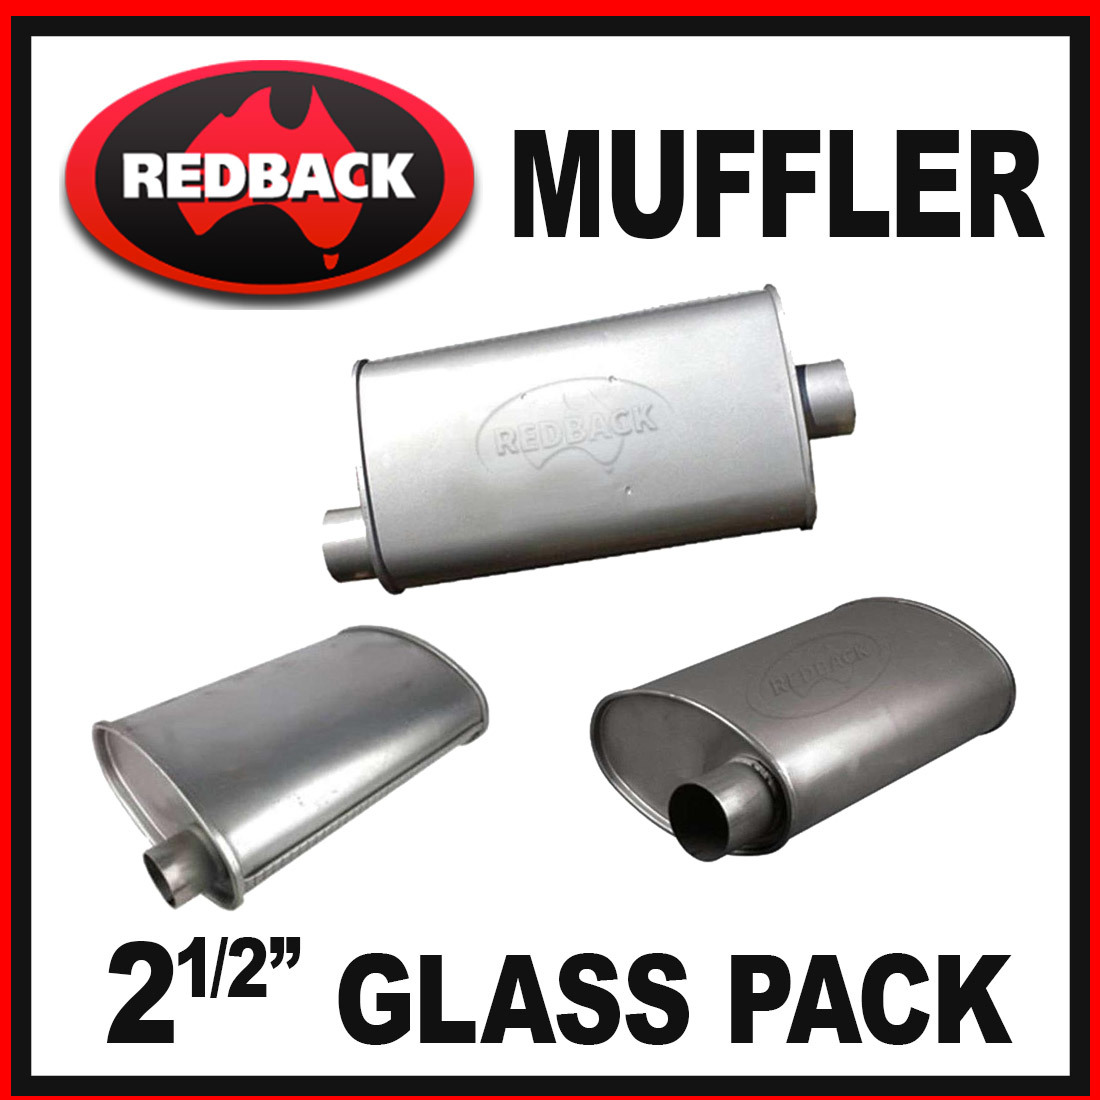 Redback 2 1/2" Glass Pack Muffler image